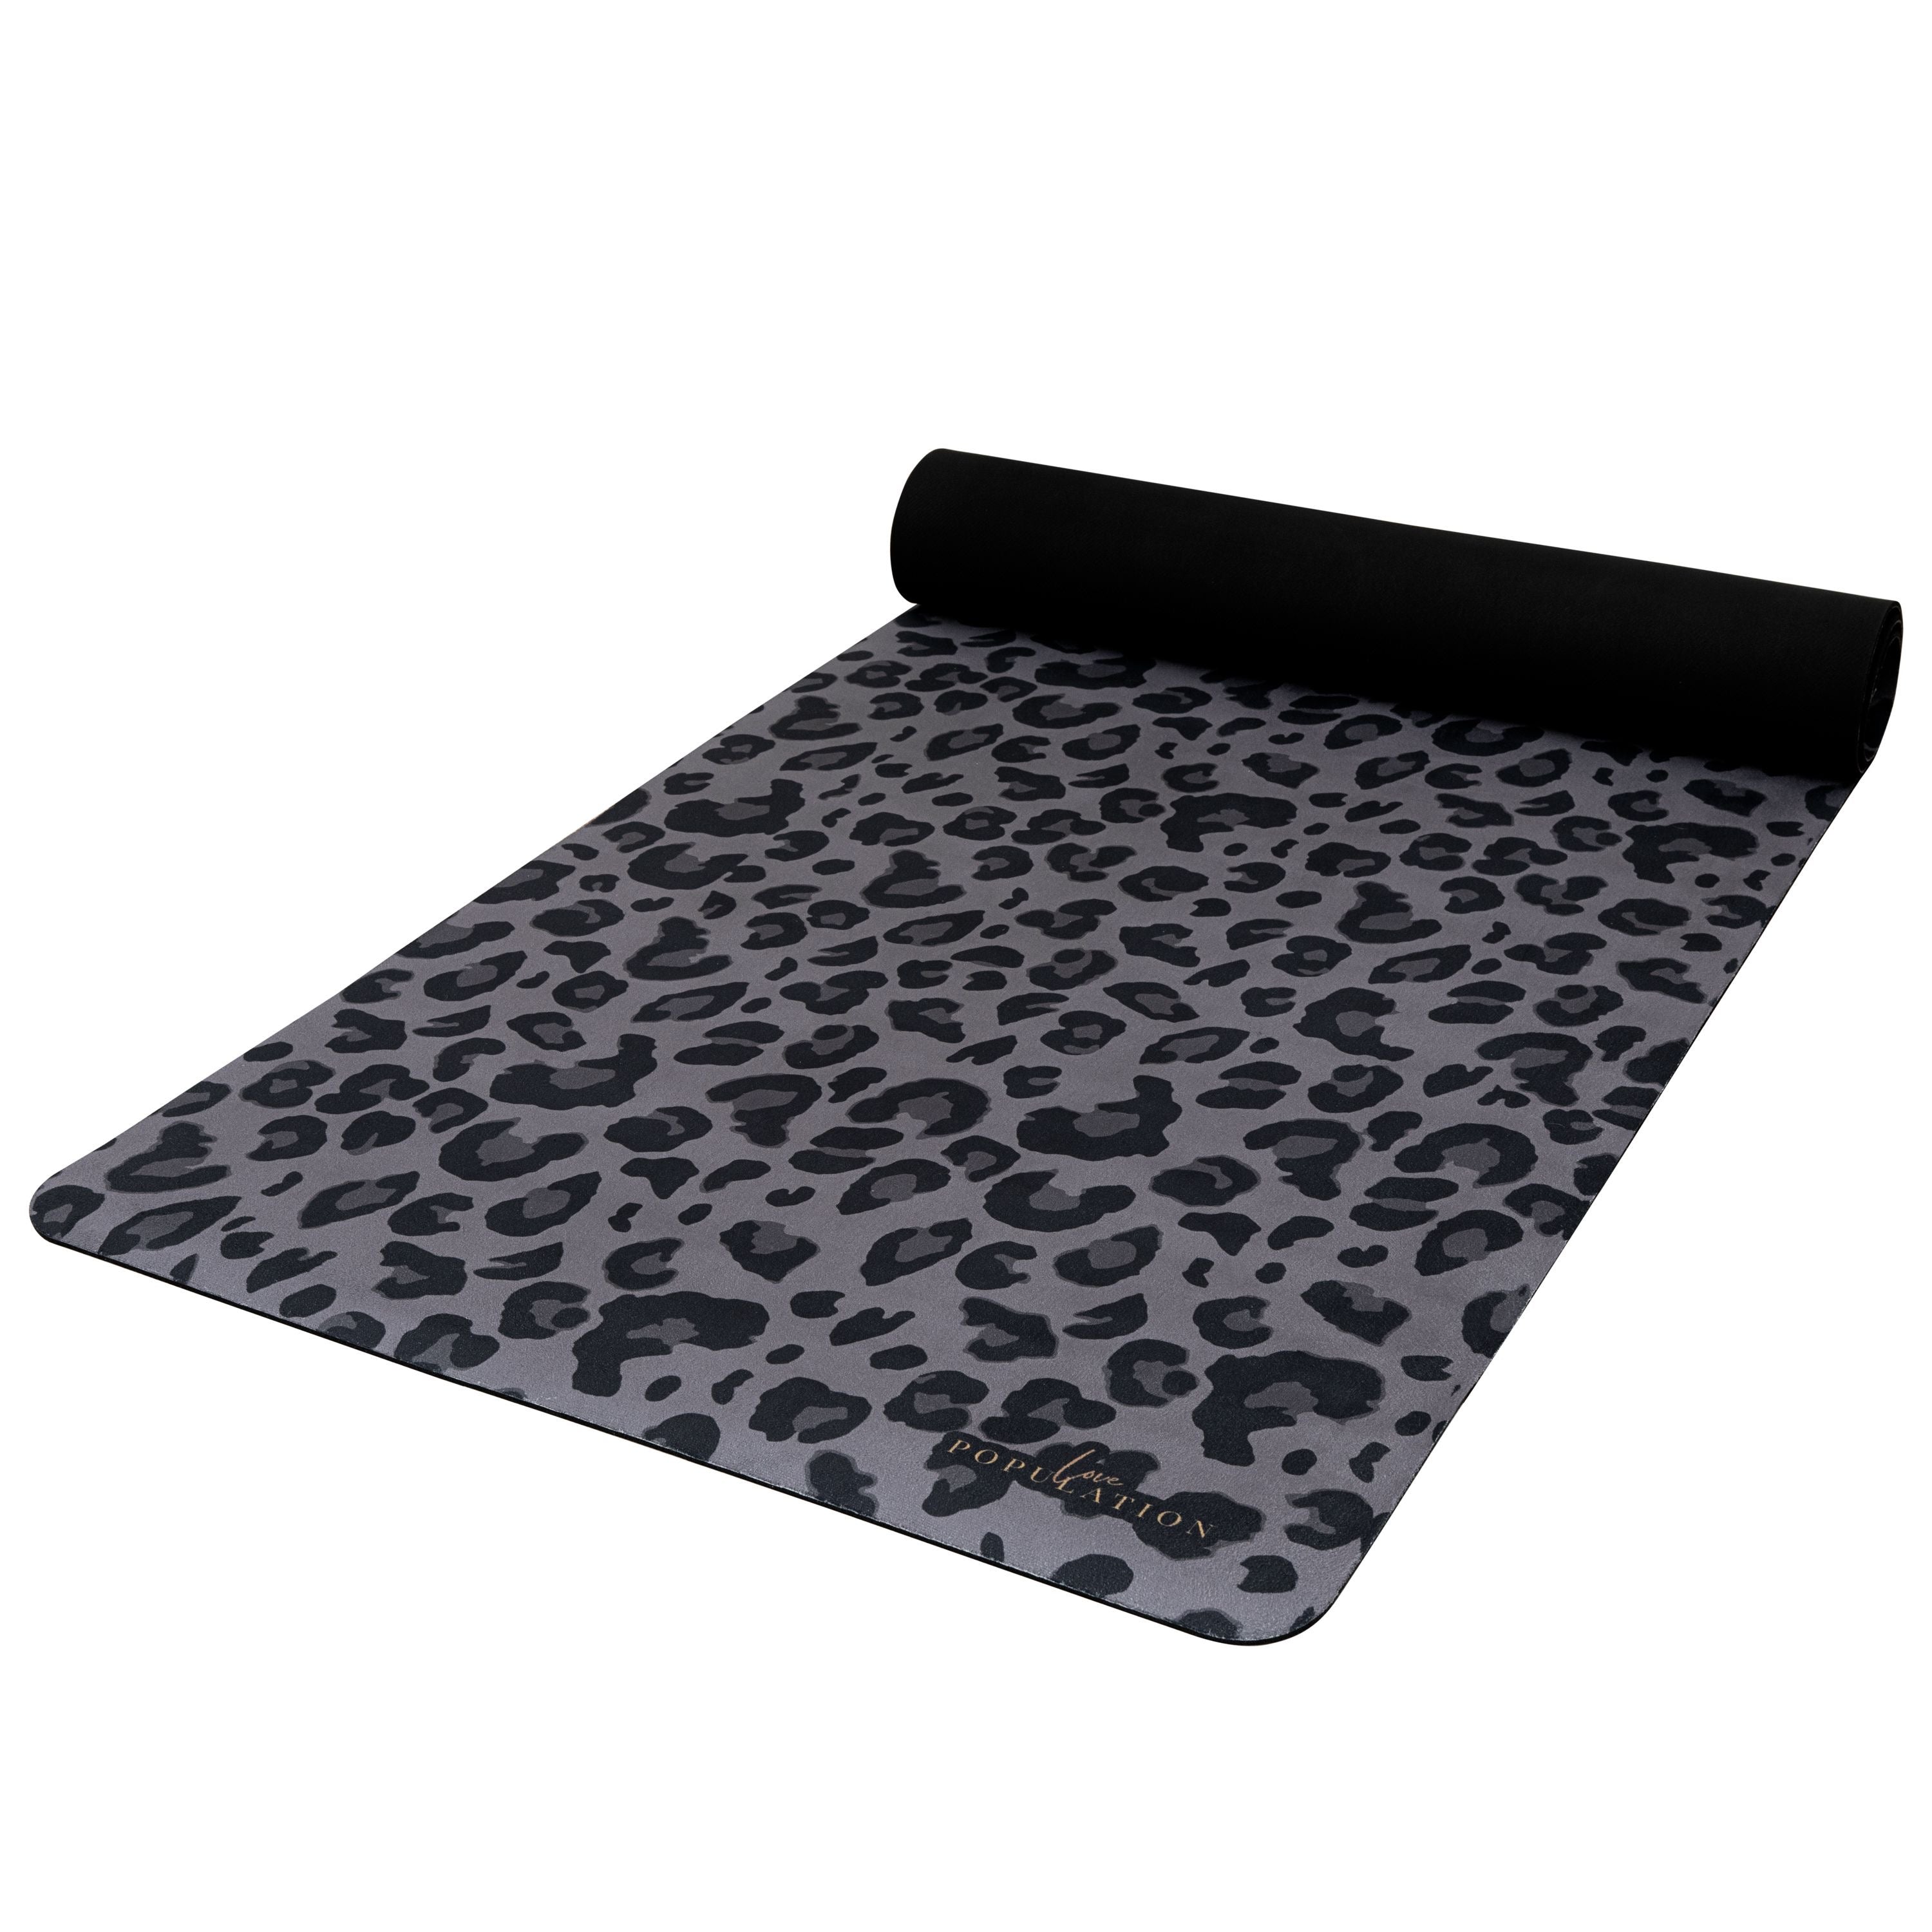 Modern Chic Black Rose Gold Foil Leopard Print Yoga Mat